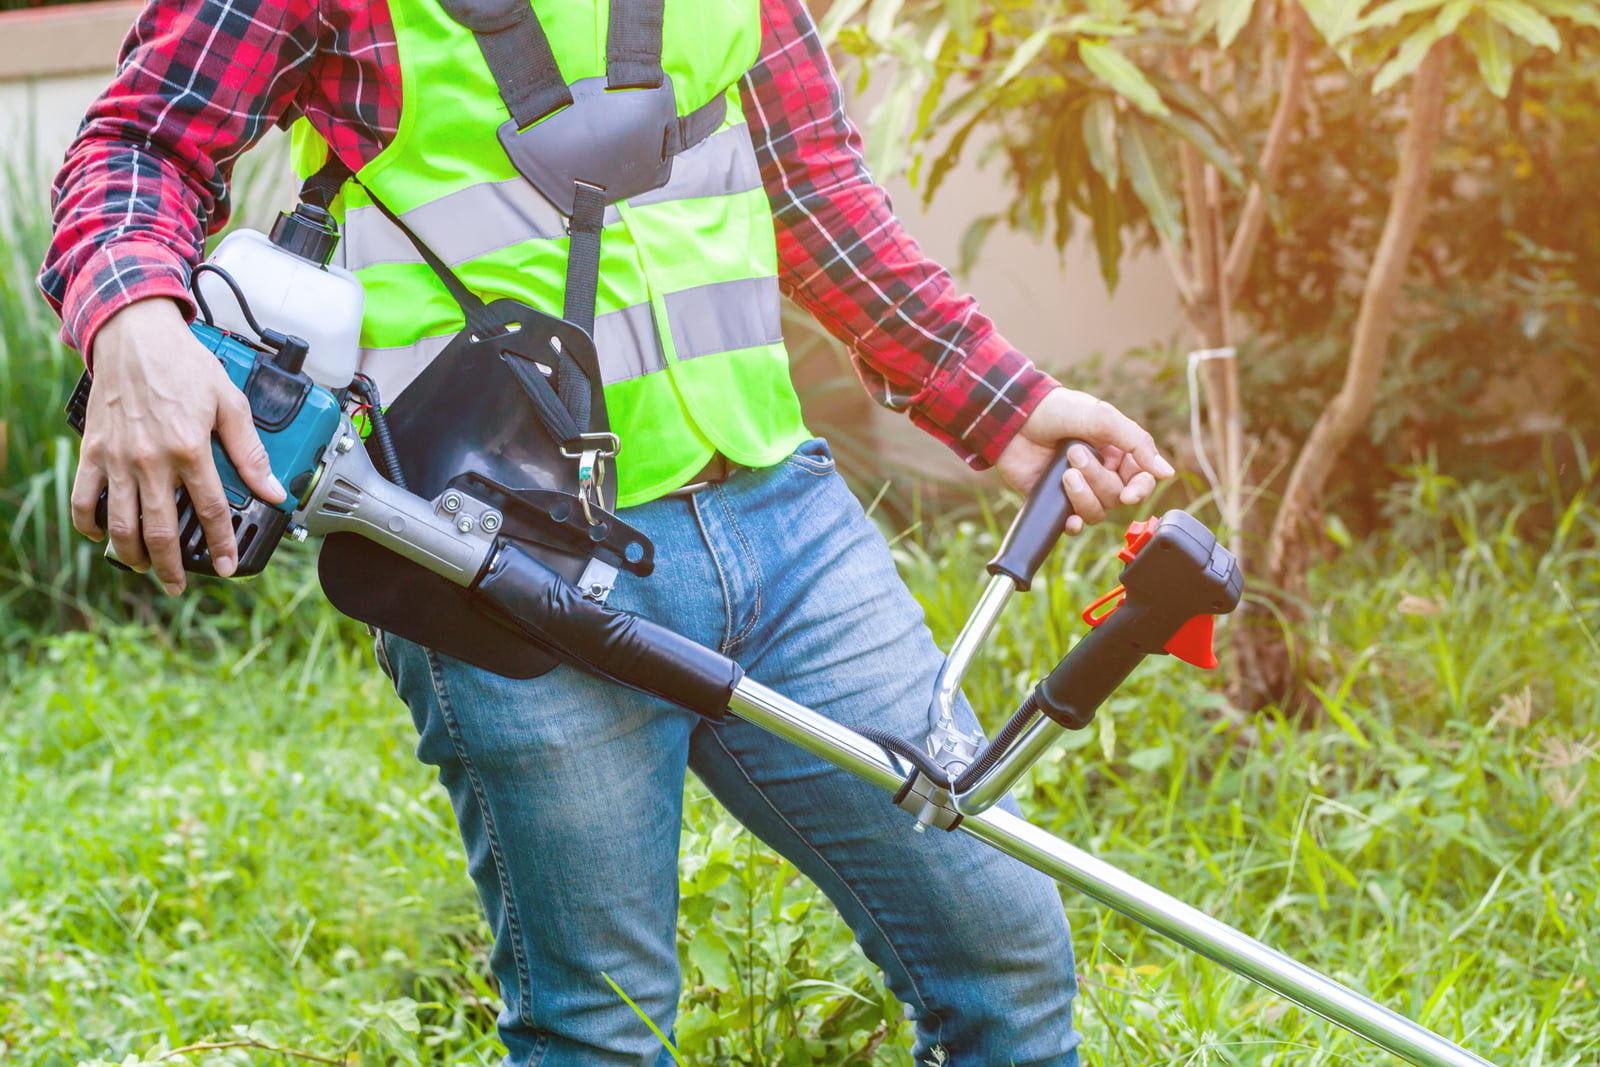 workman holding lawn mower machine cutting grass in garden on morning